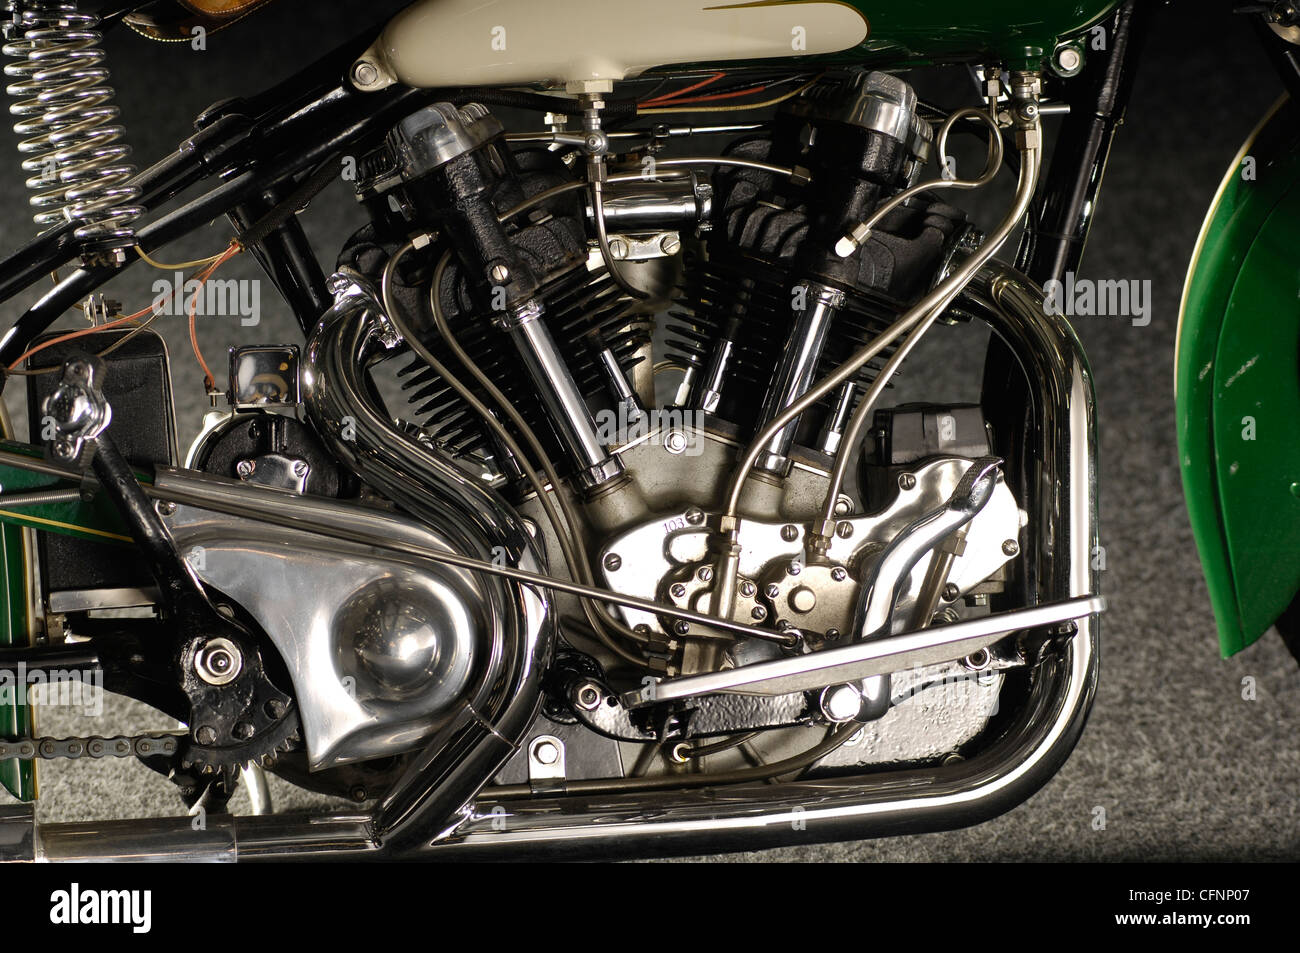 1937 Crocker big tank V-Twin motorcycle Stock Photo